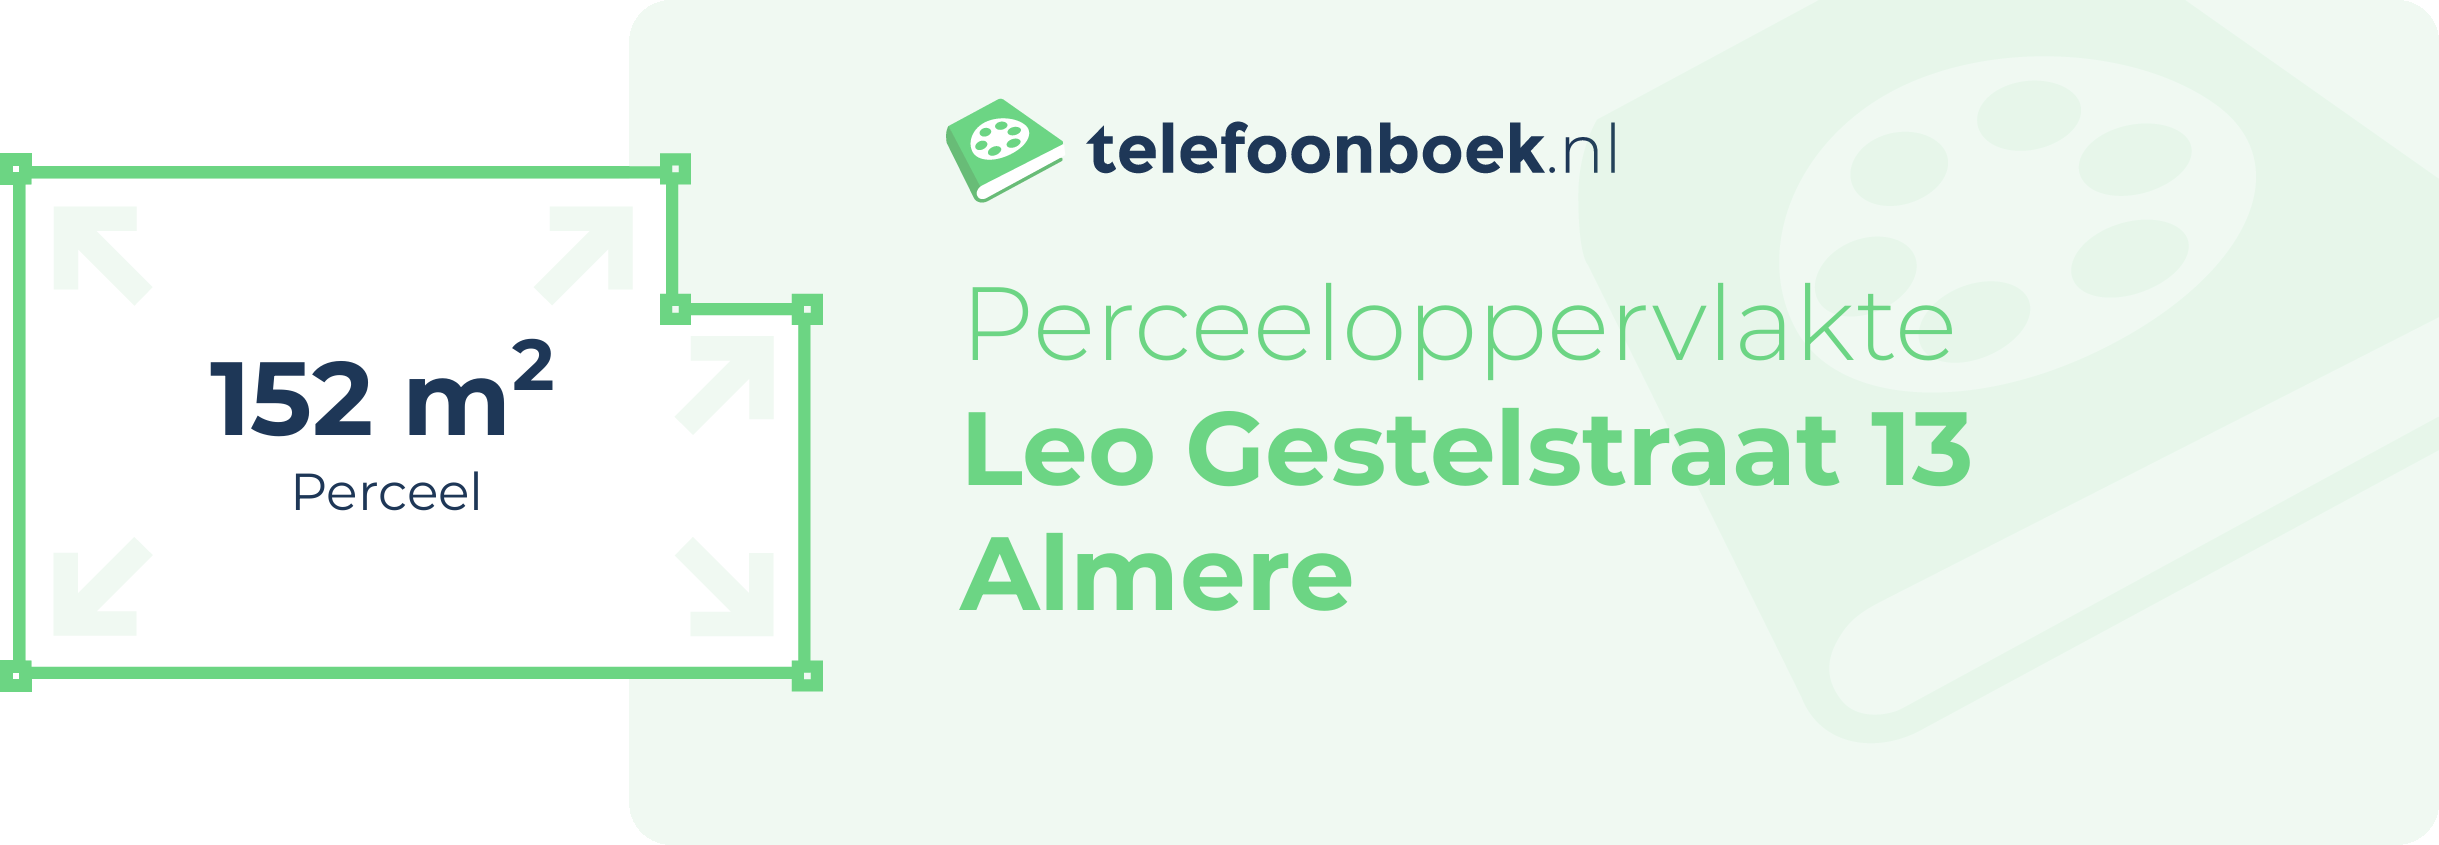 Perceeloppervlakte Leo Gestelstraat 13 Almere